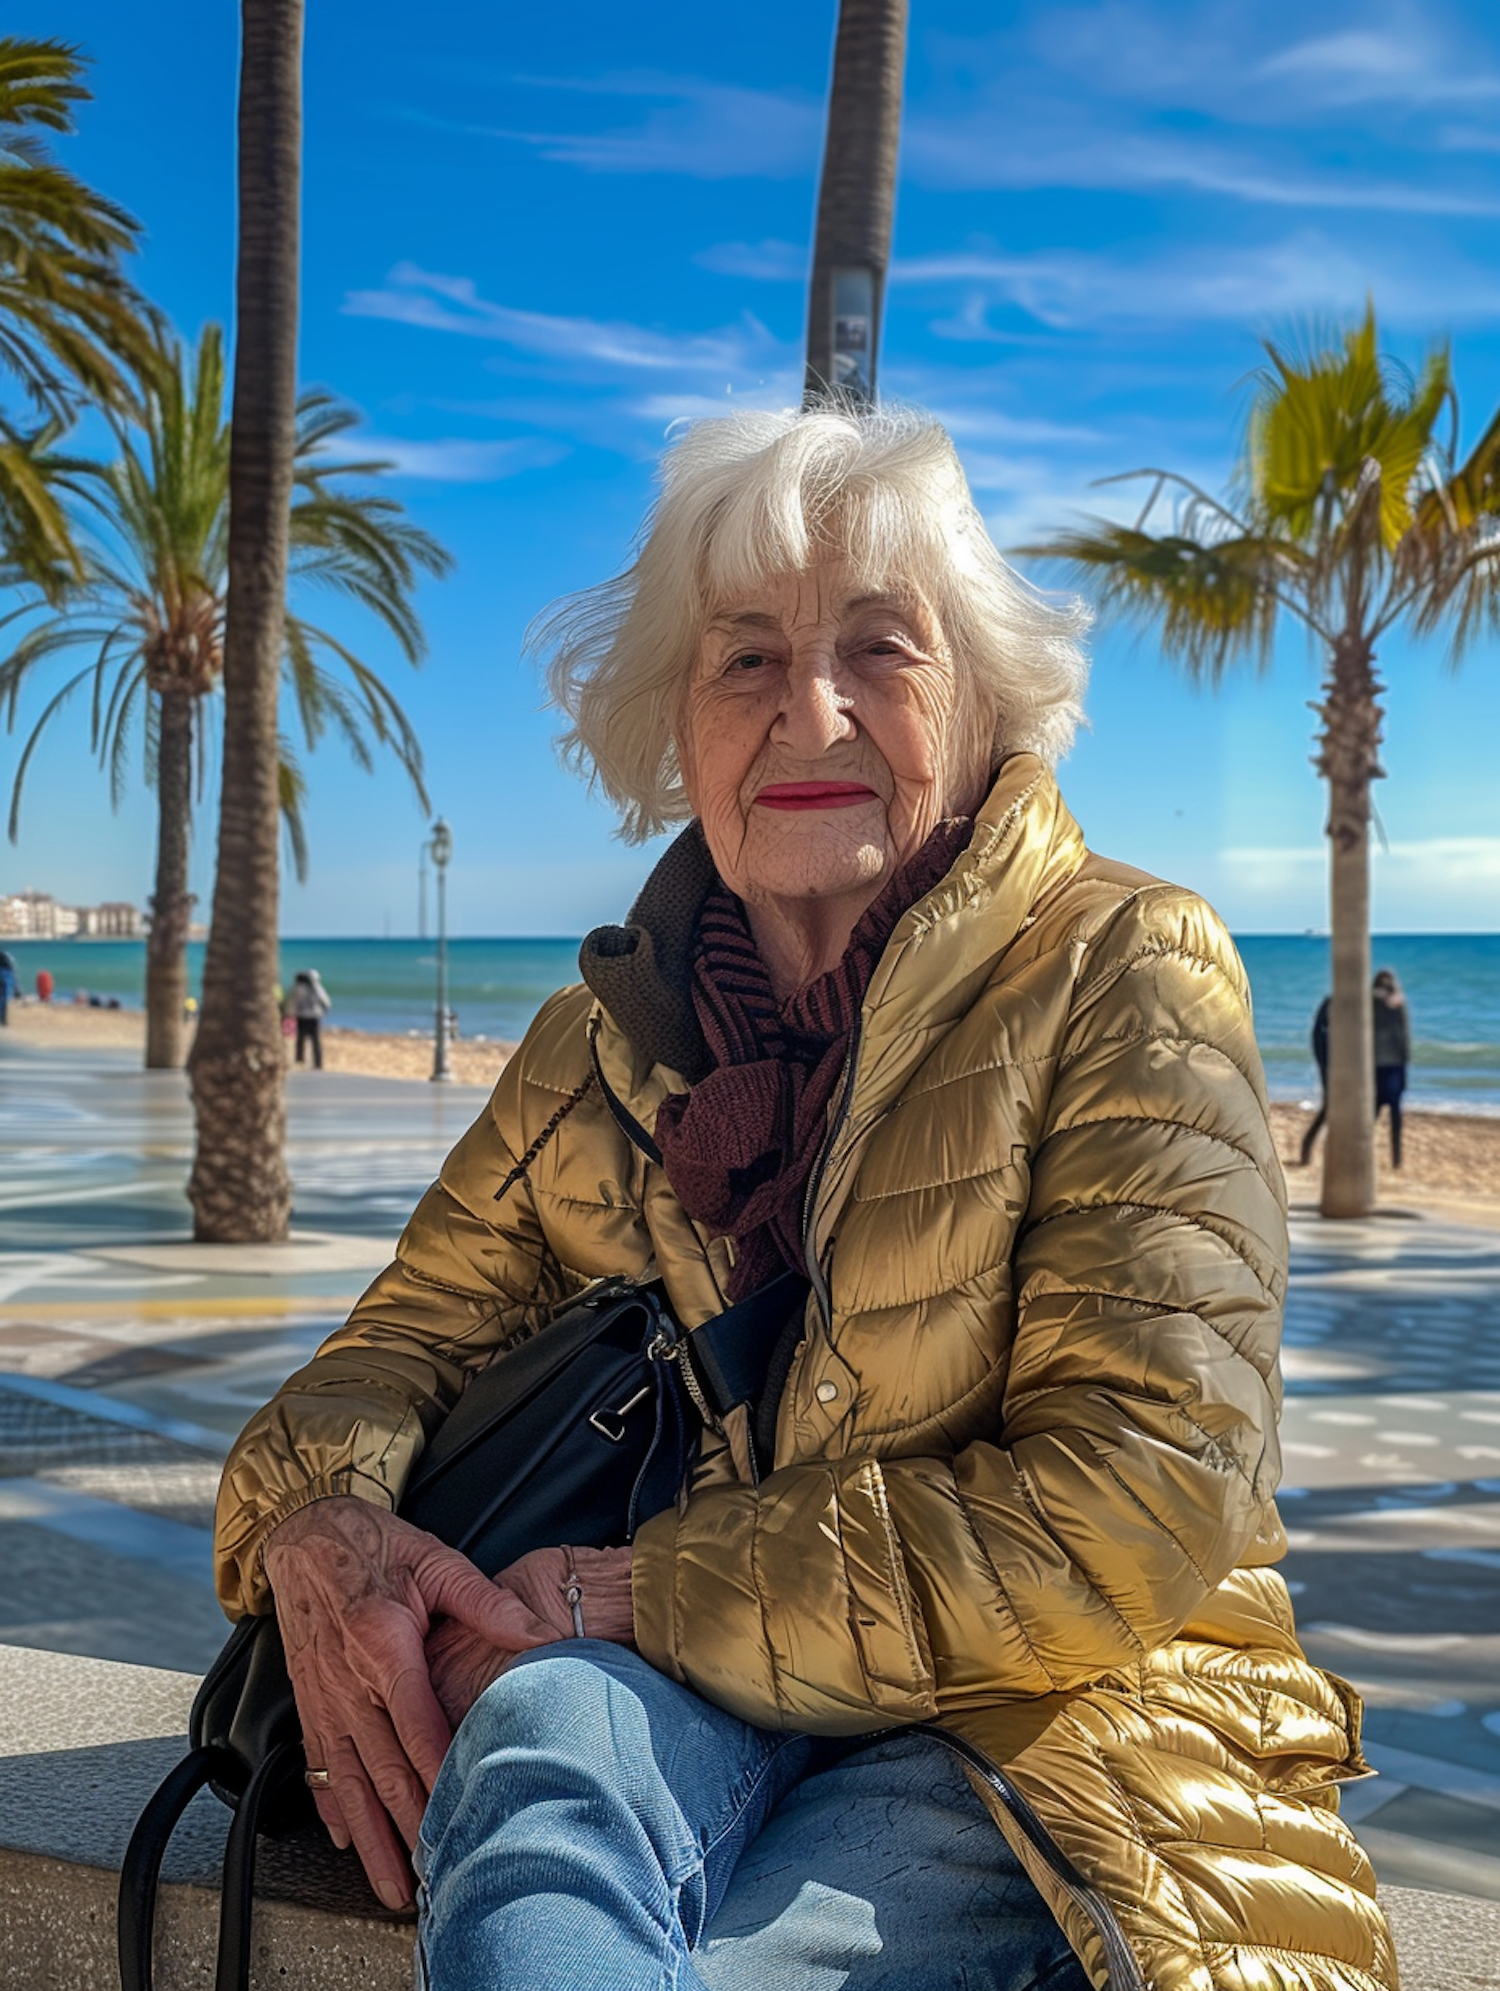 Elderly Woman Enjoying a Sunny Day at the Beach